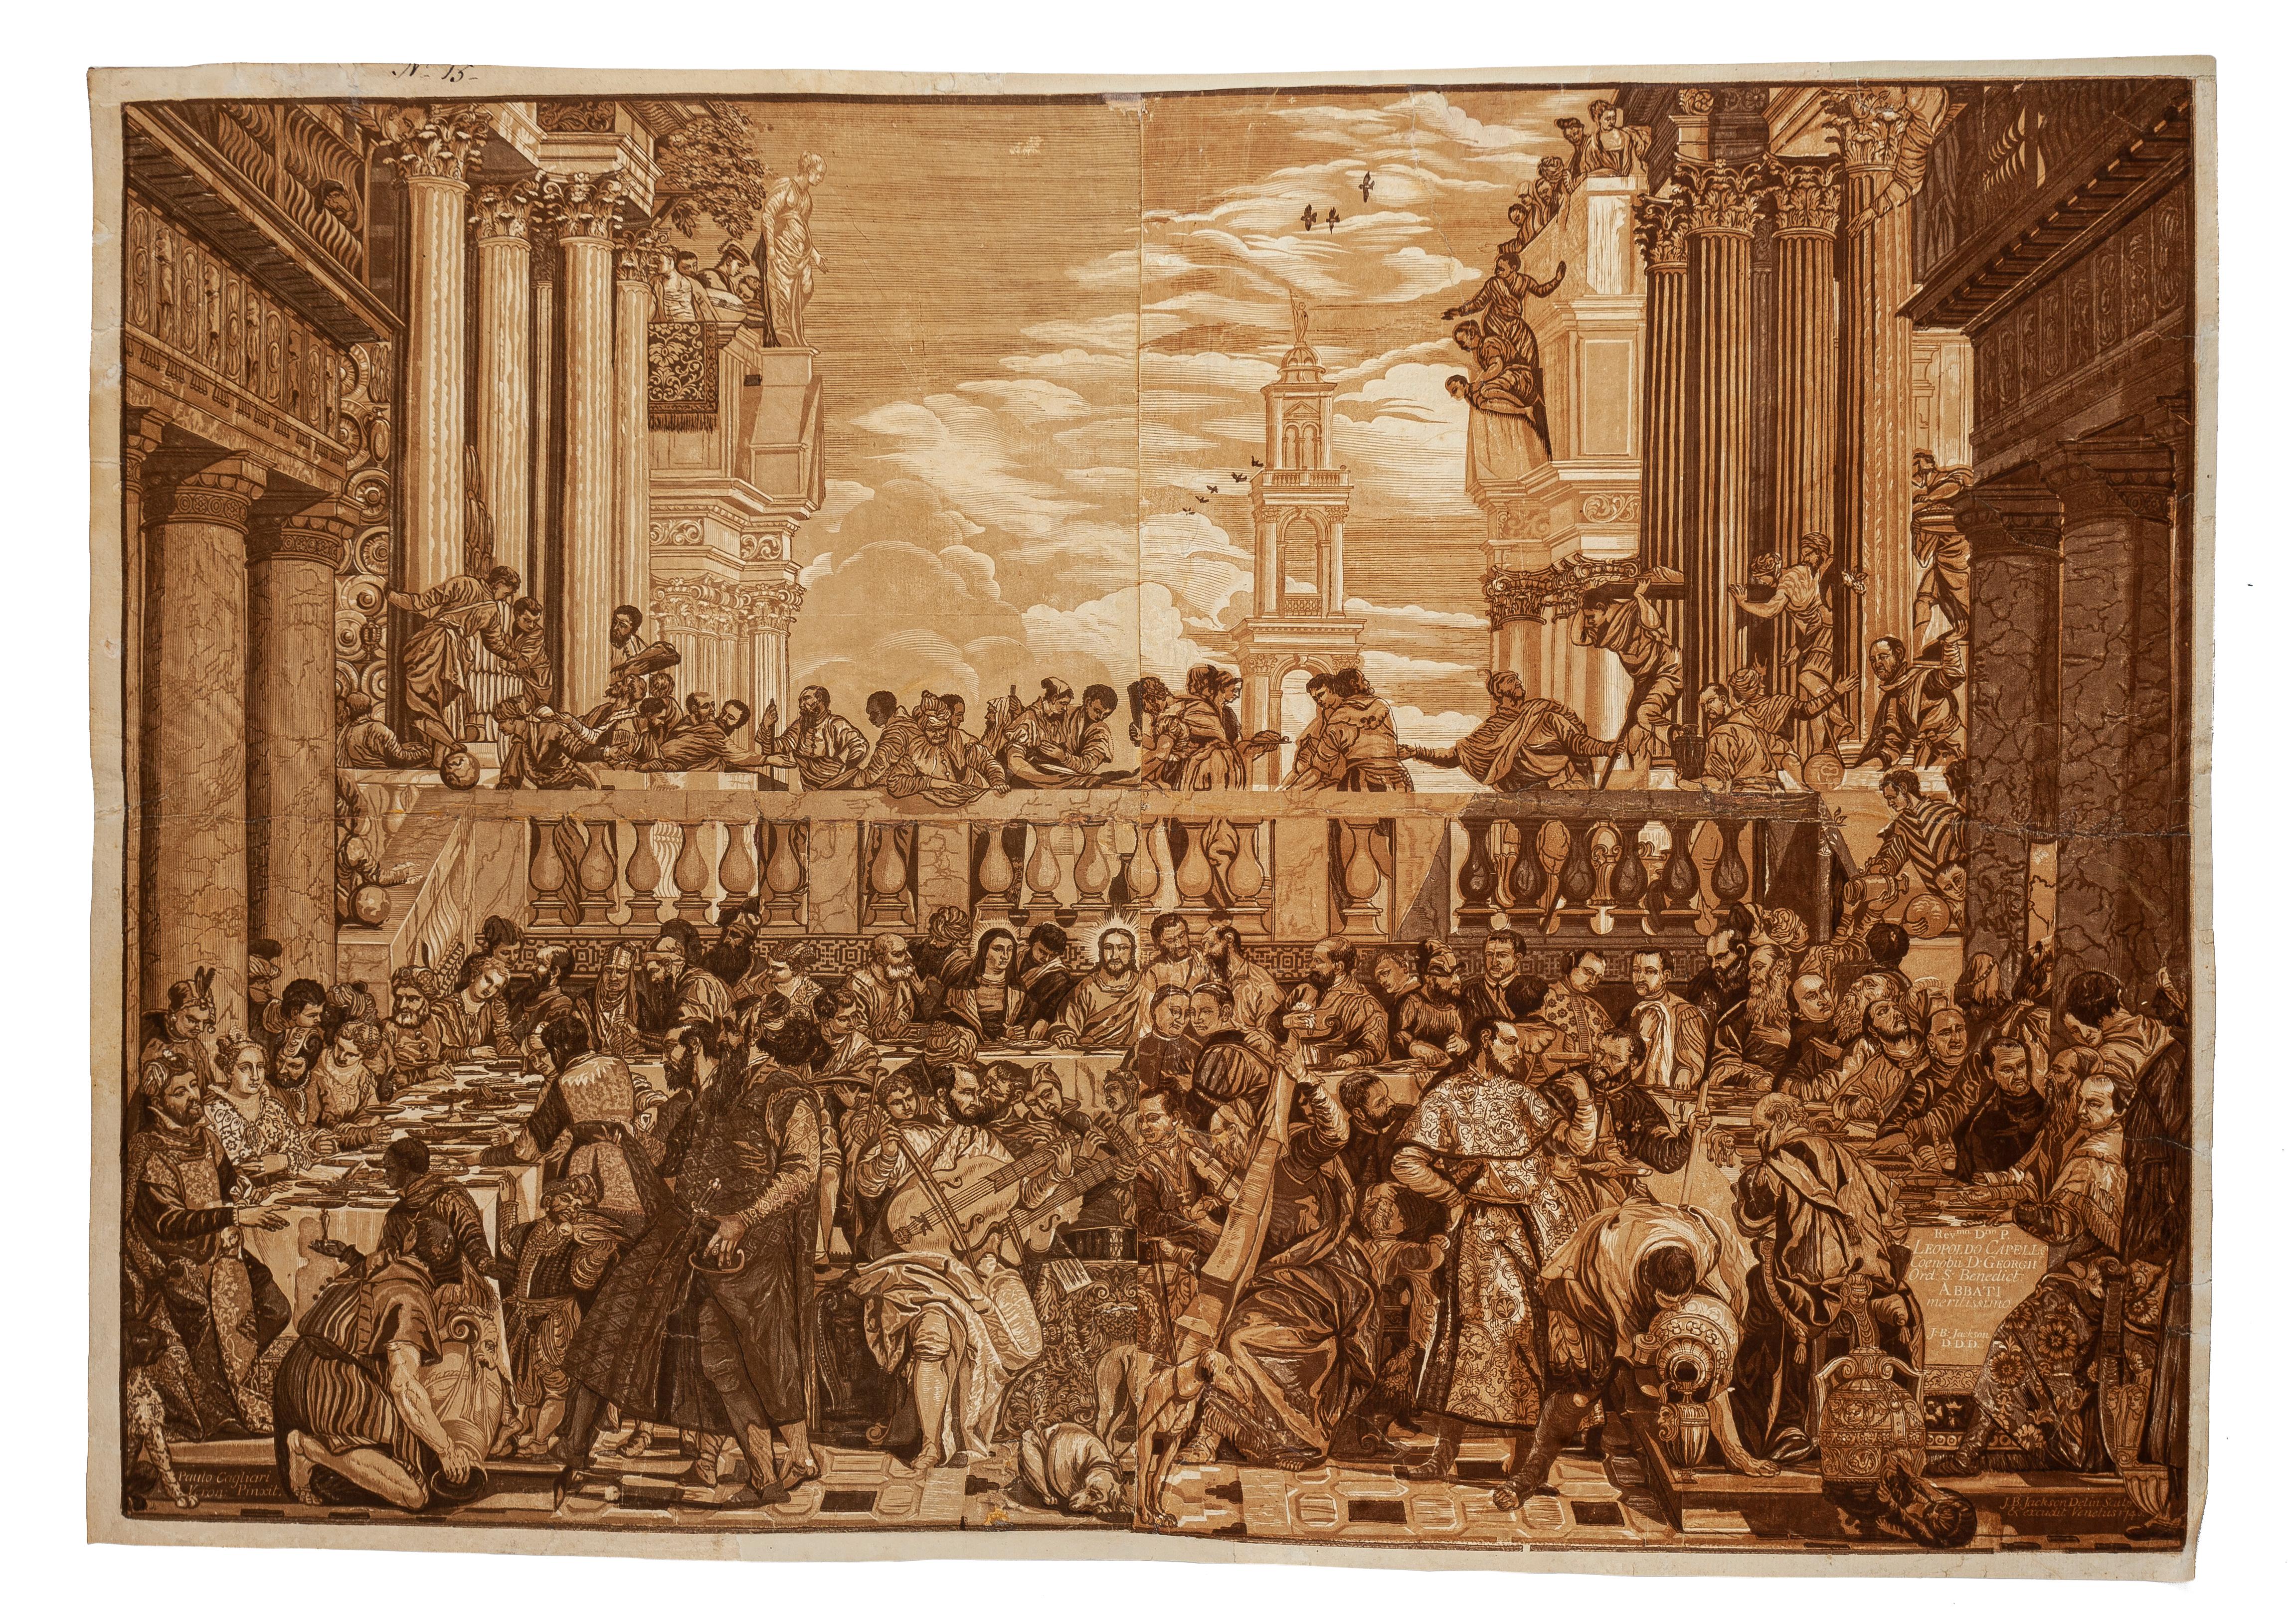 John Baptist Jackson Figurative Print - The Wedding Feast at Cana - Original Woodcut Print by J.B. Jackson - 1740